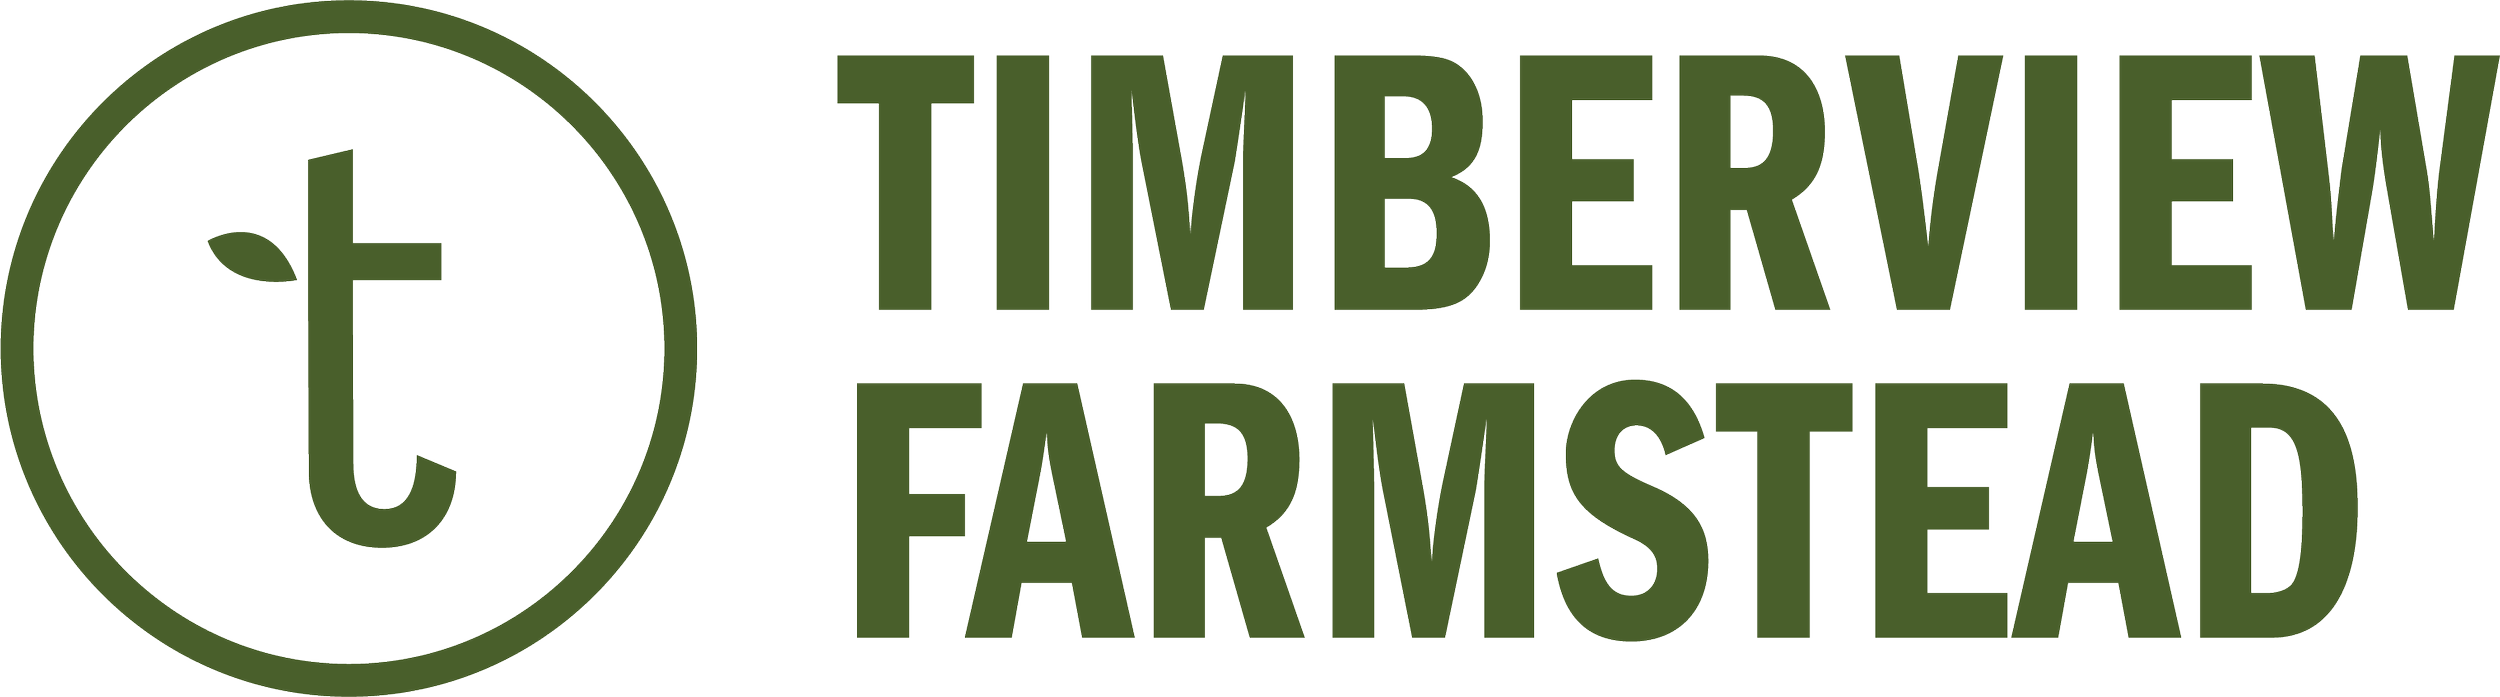 Timberview-vertical-logo-green.png